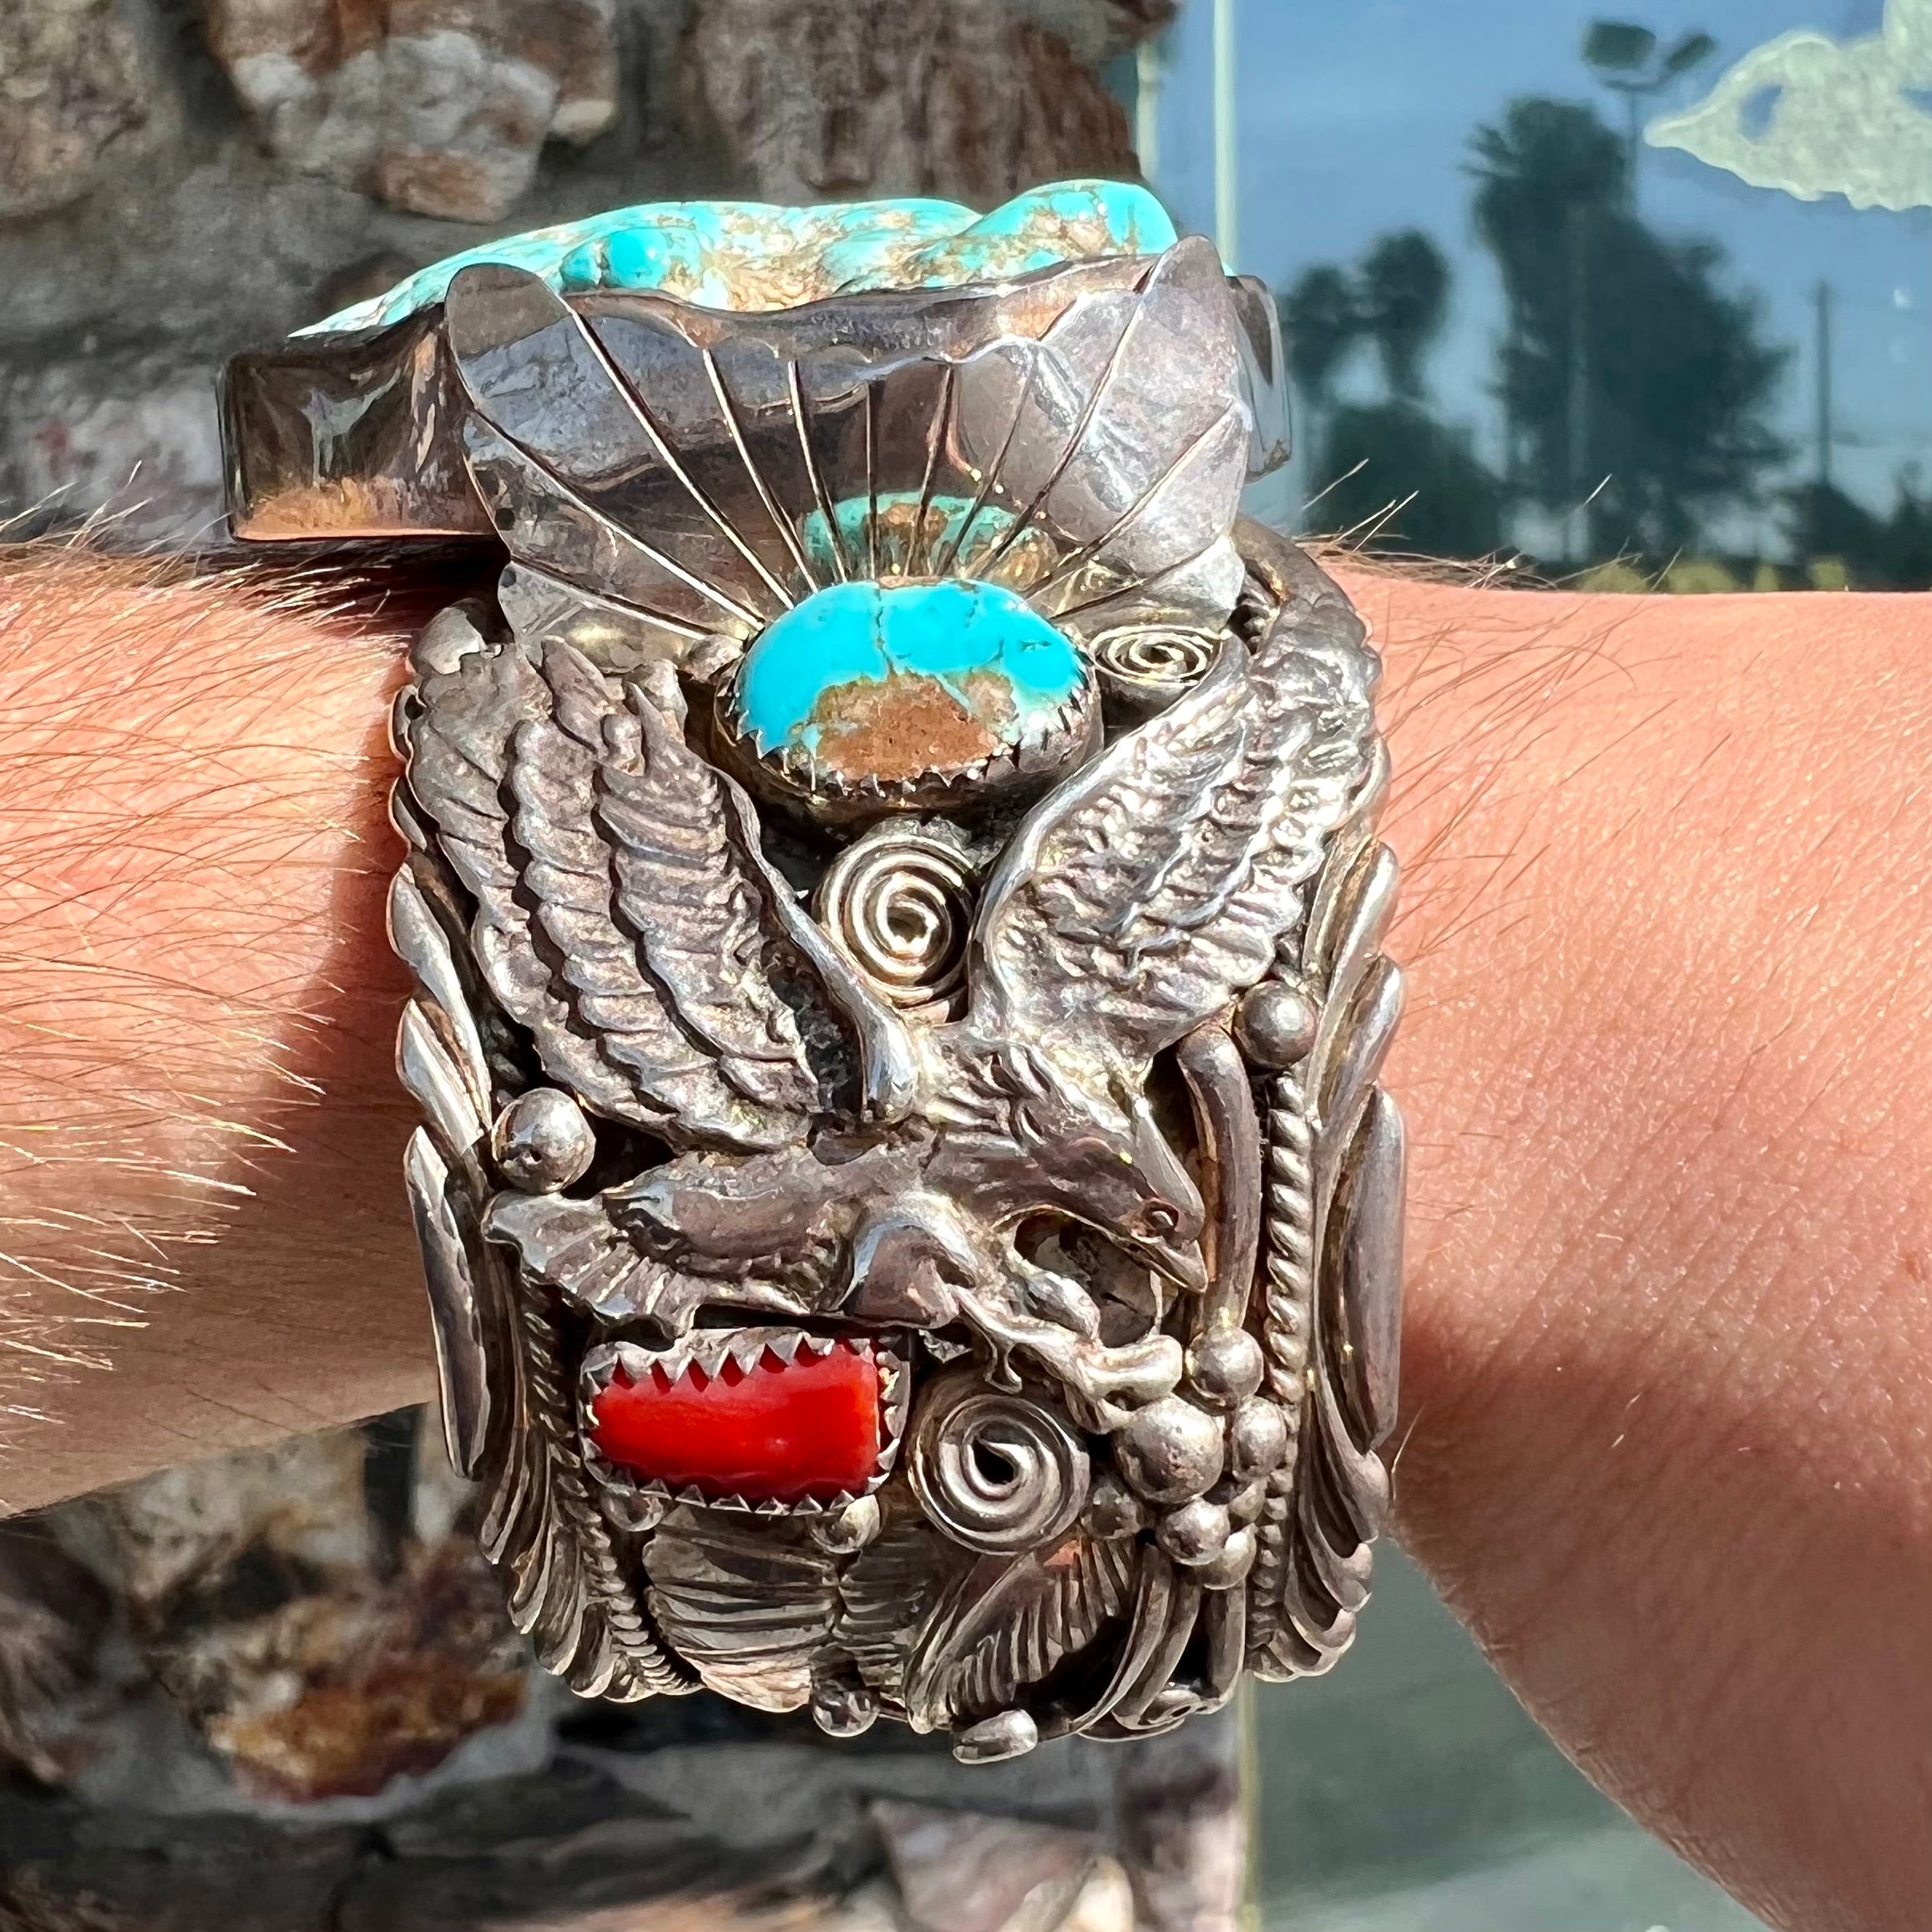 Native American Jewelry, Turquoise Rings - Stunning Pieces | Sedona, AZ